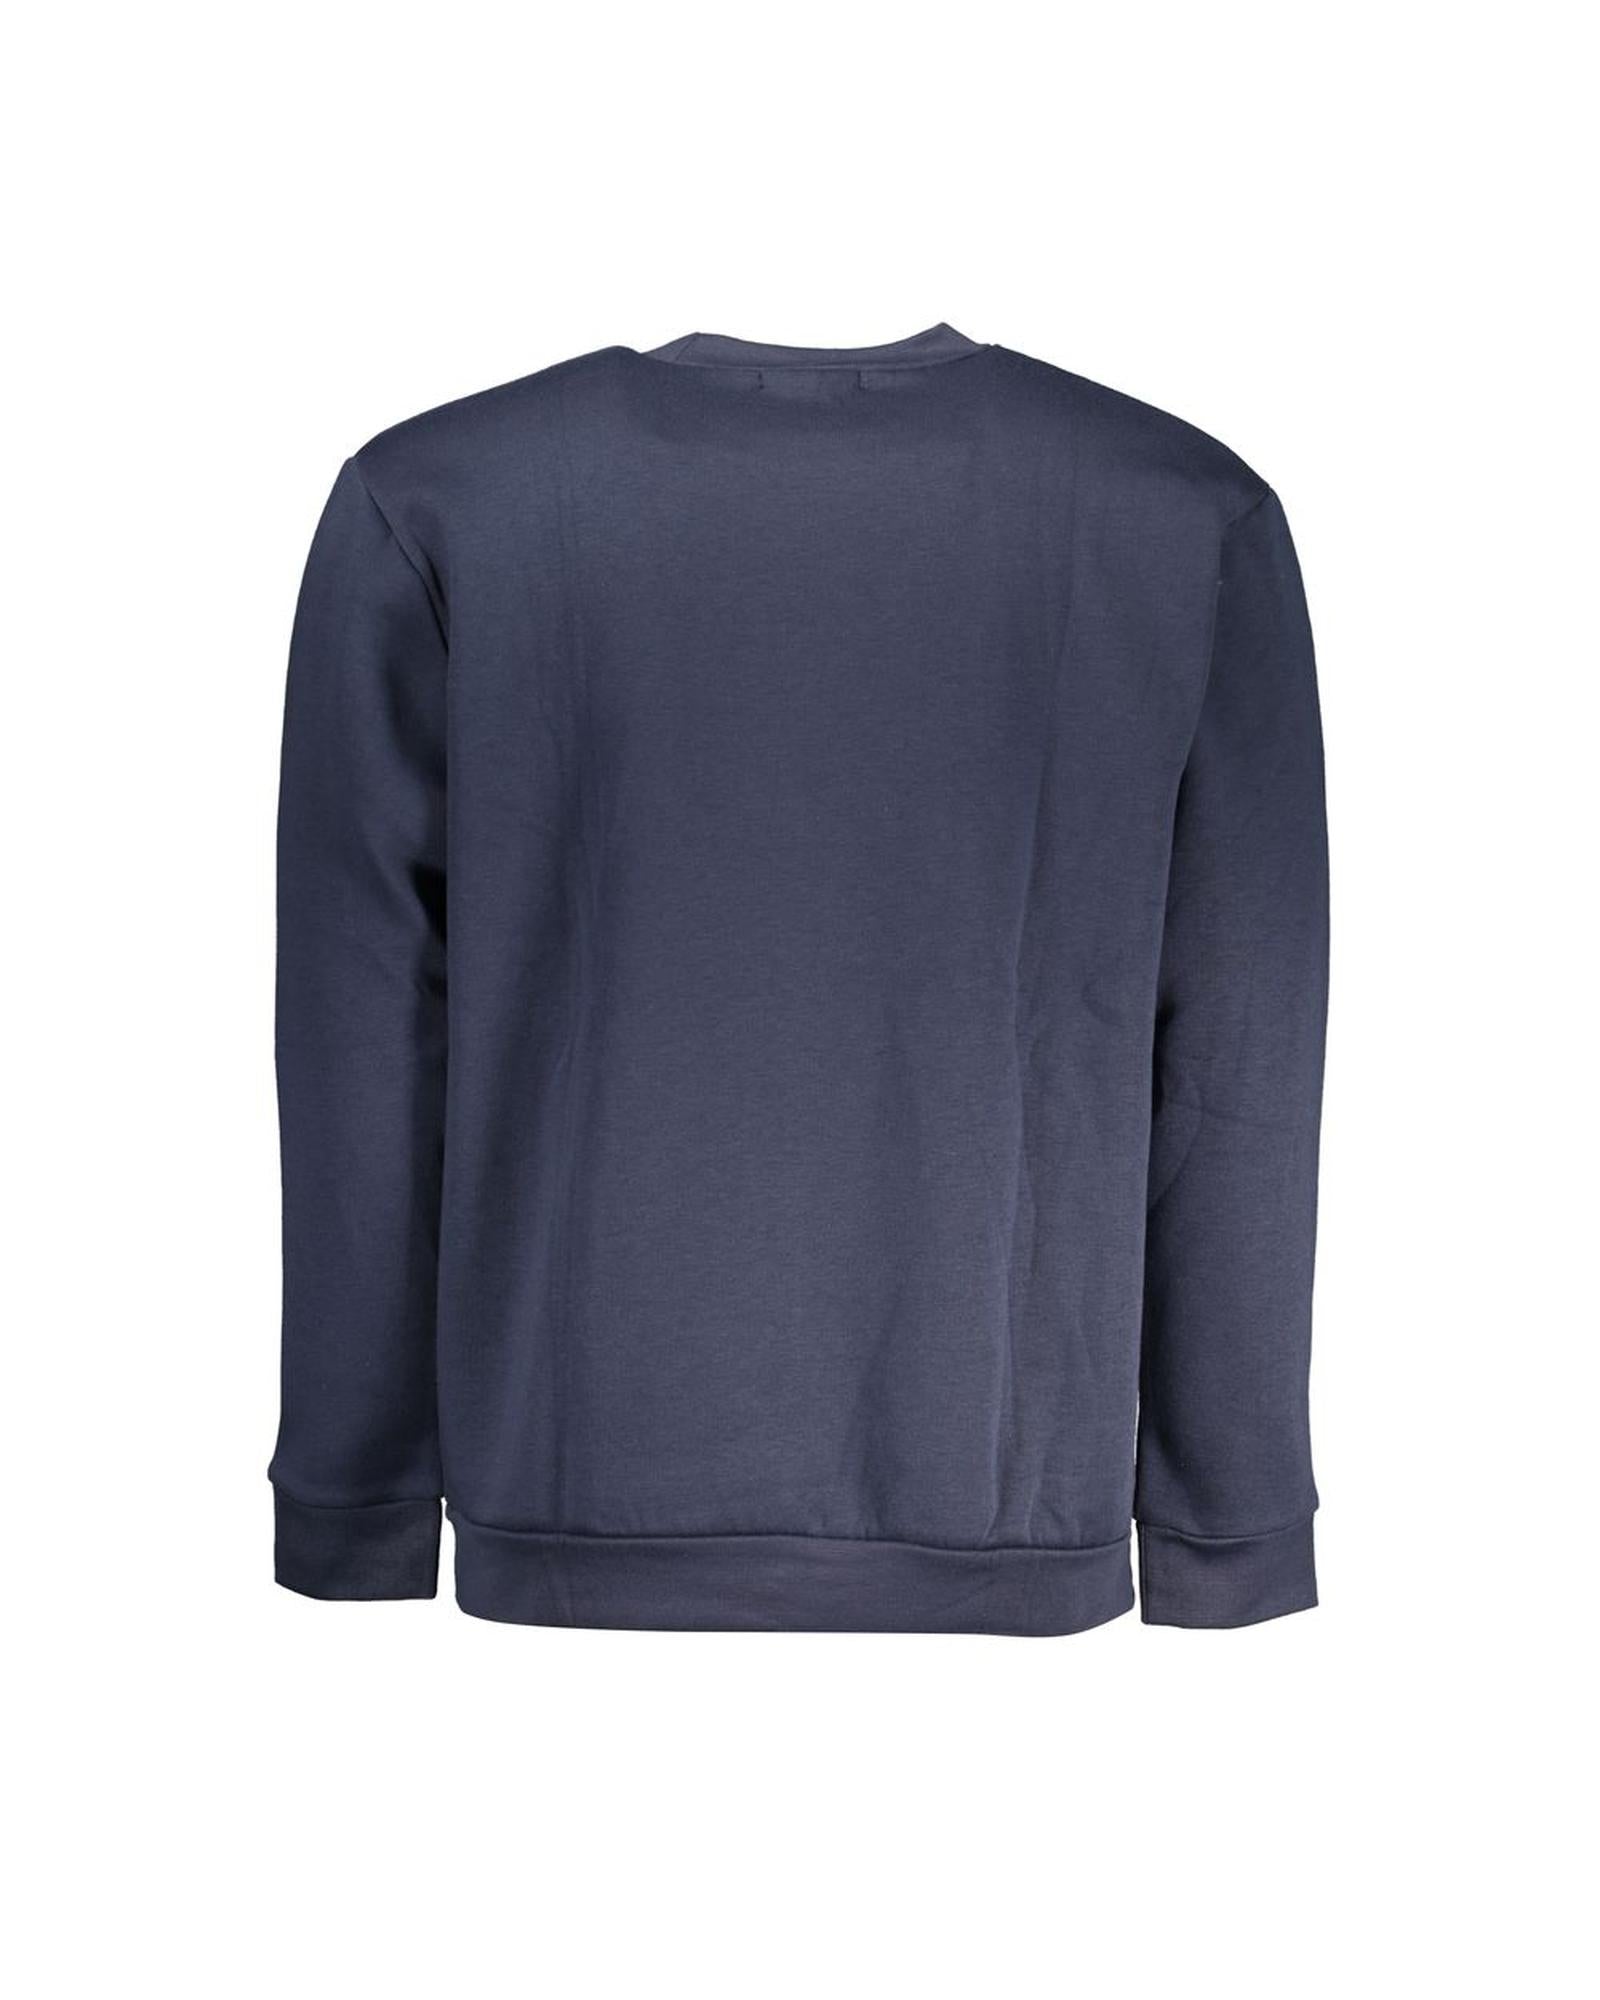 Chic Black/Blue Cotton Sweater For Women - Cavalli Class